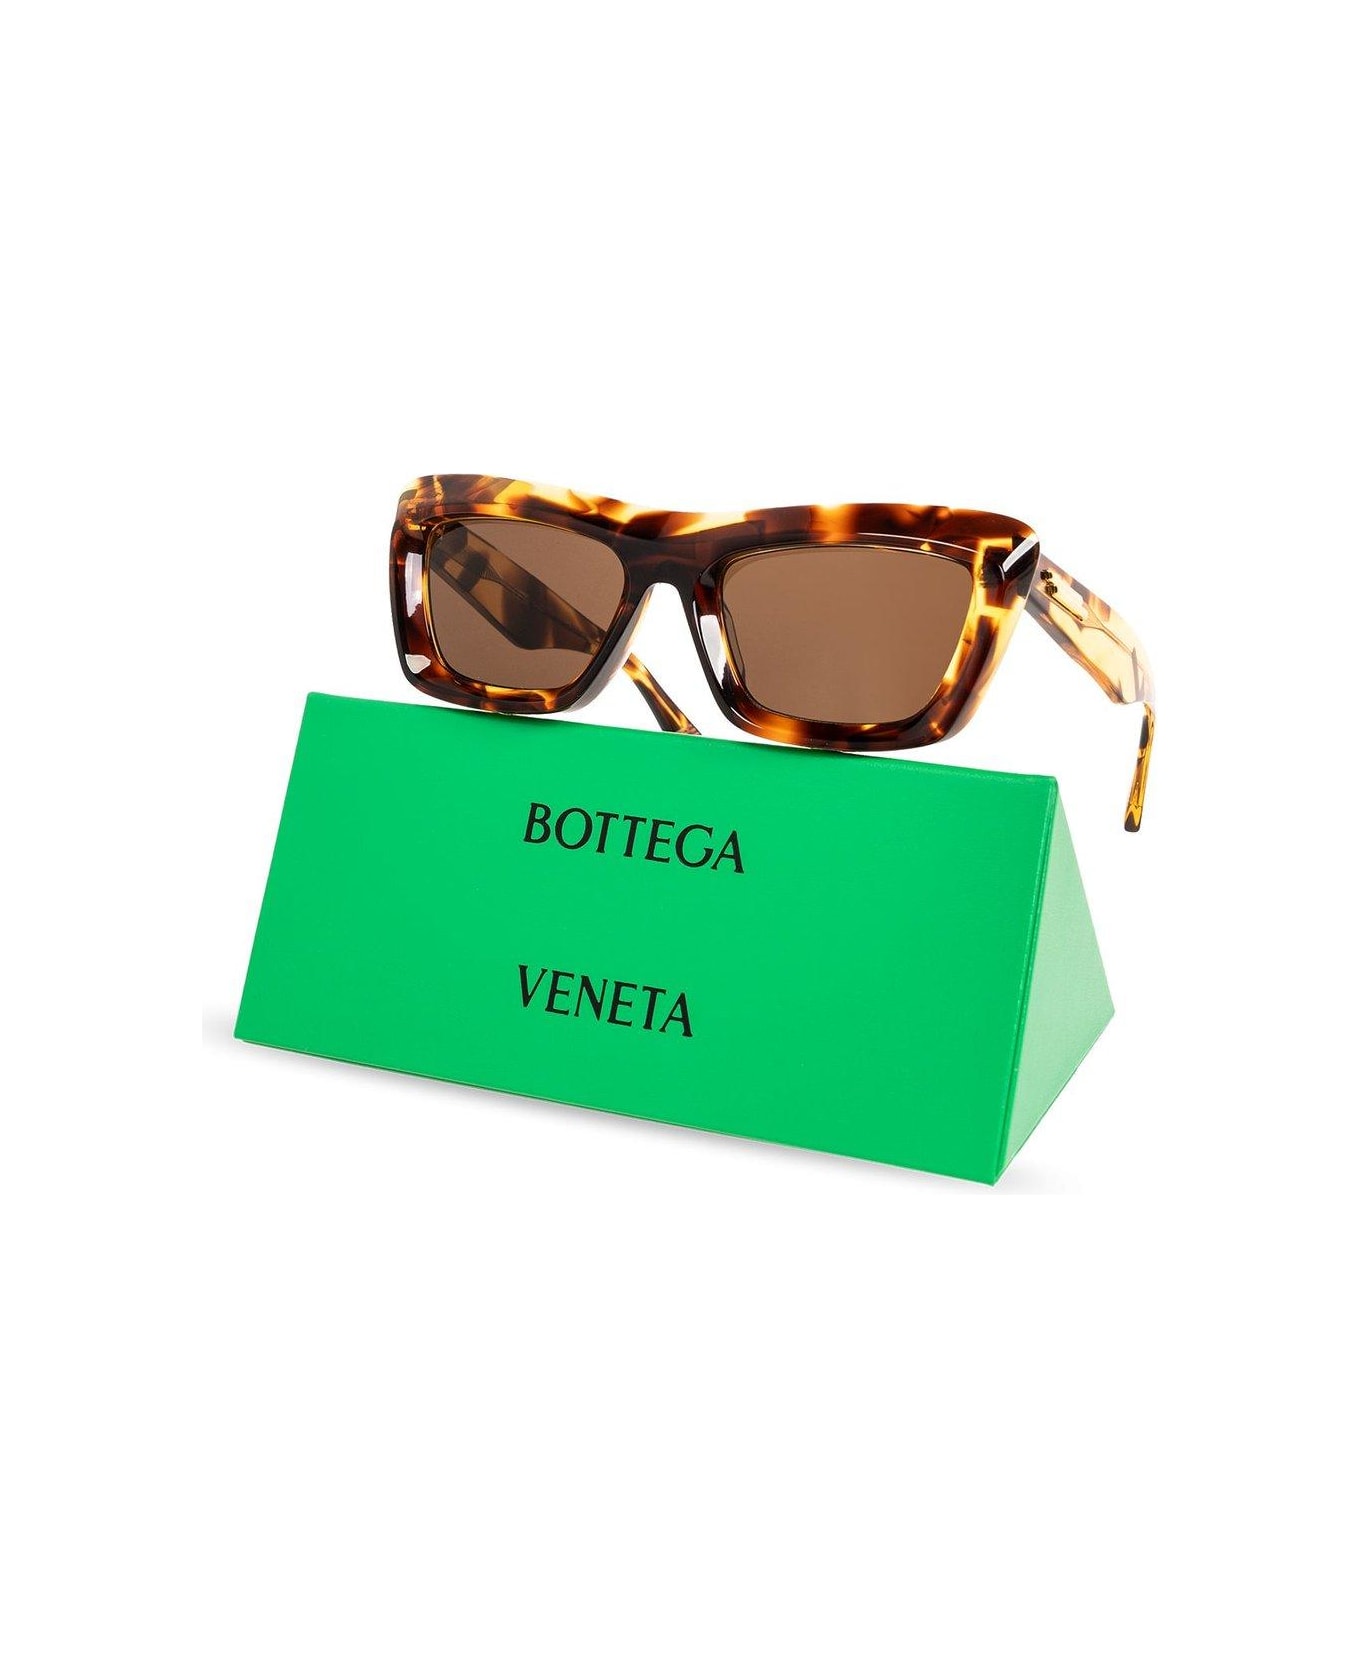 Bottega Veneta Square Frame Sunglasses - Havana Brown